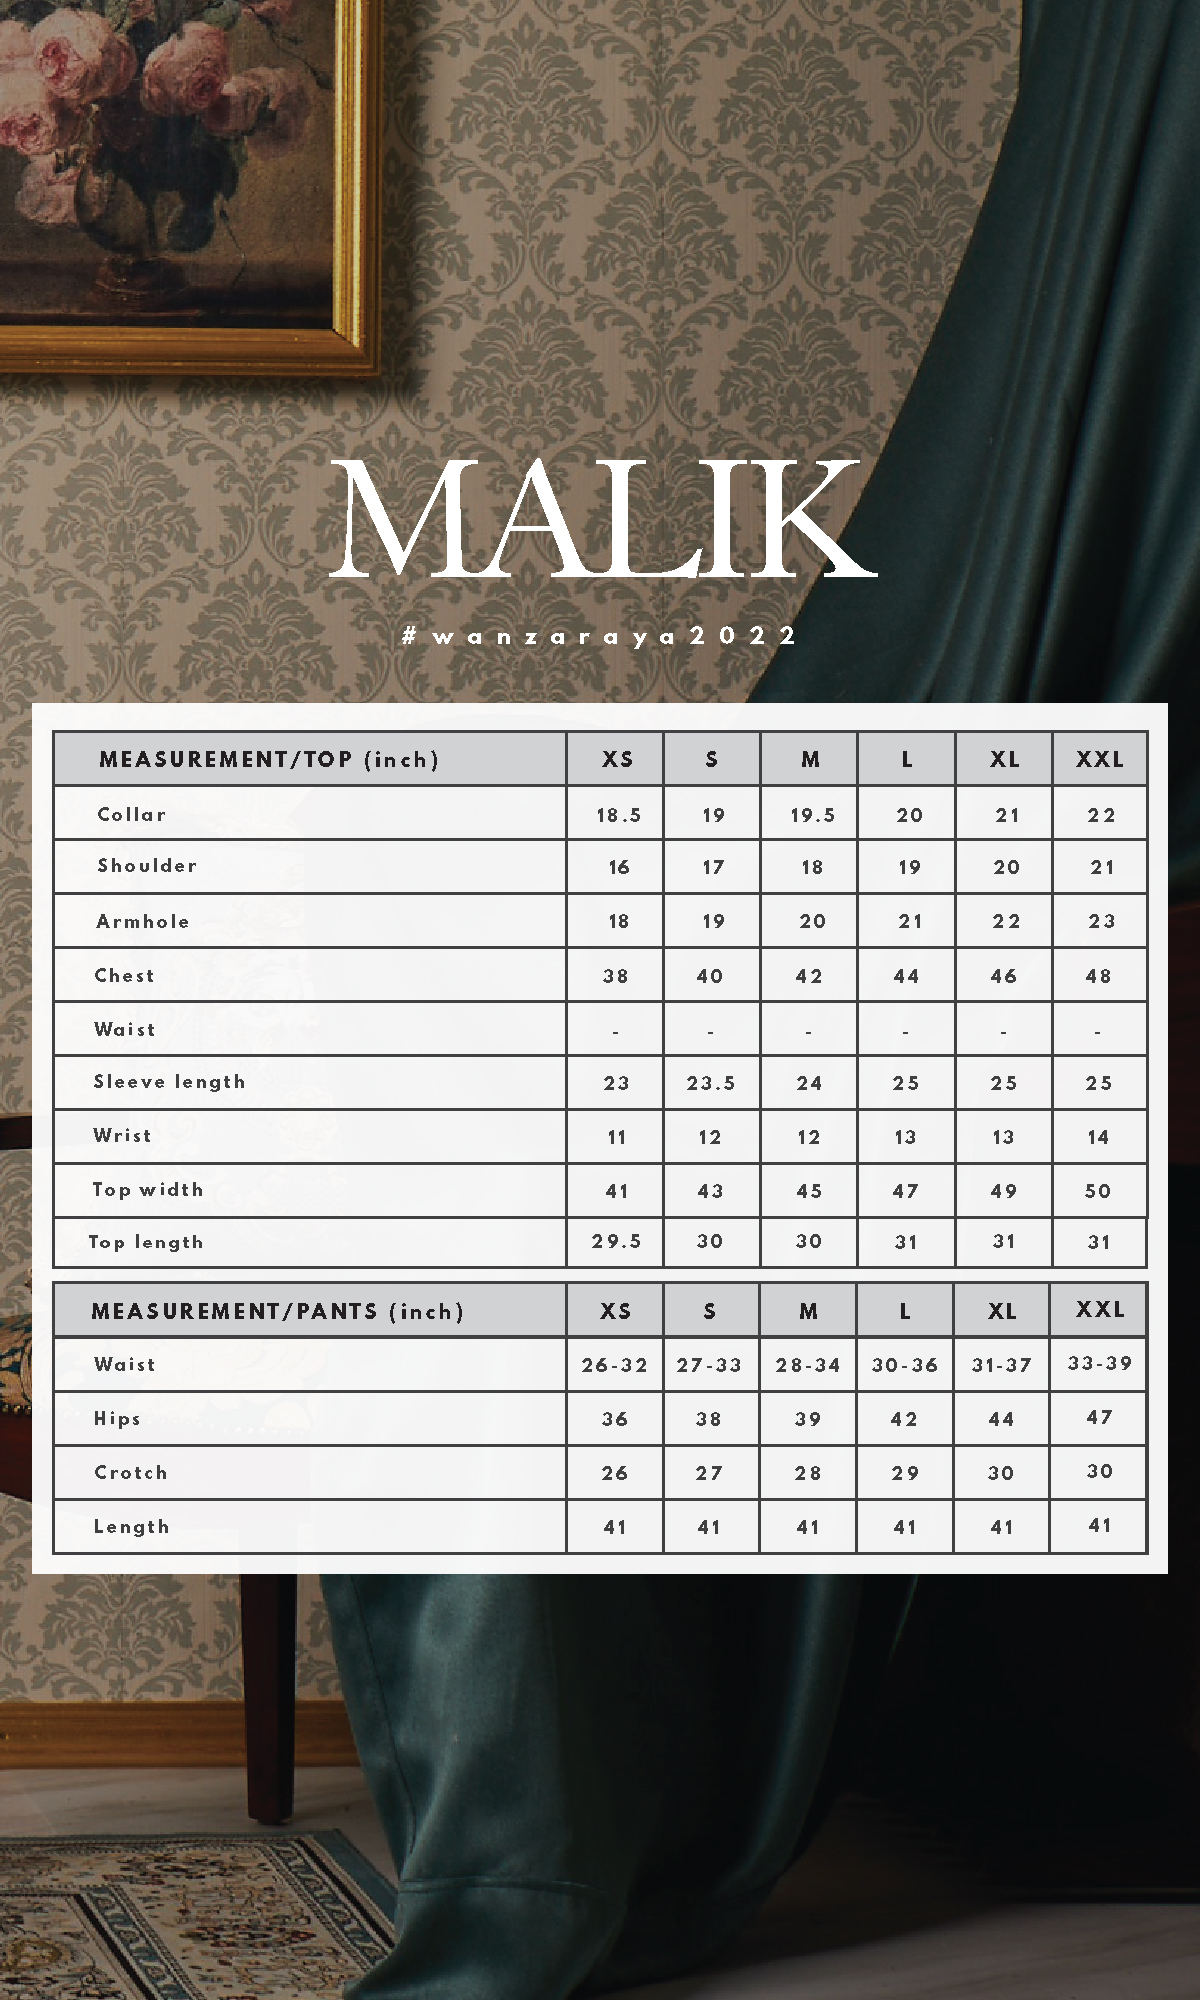 Malik Baju Melayu in Peach